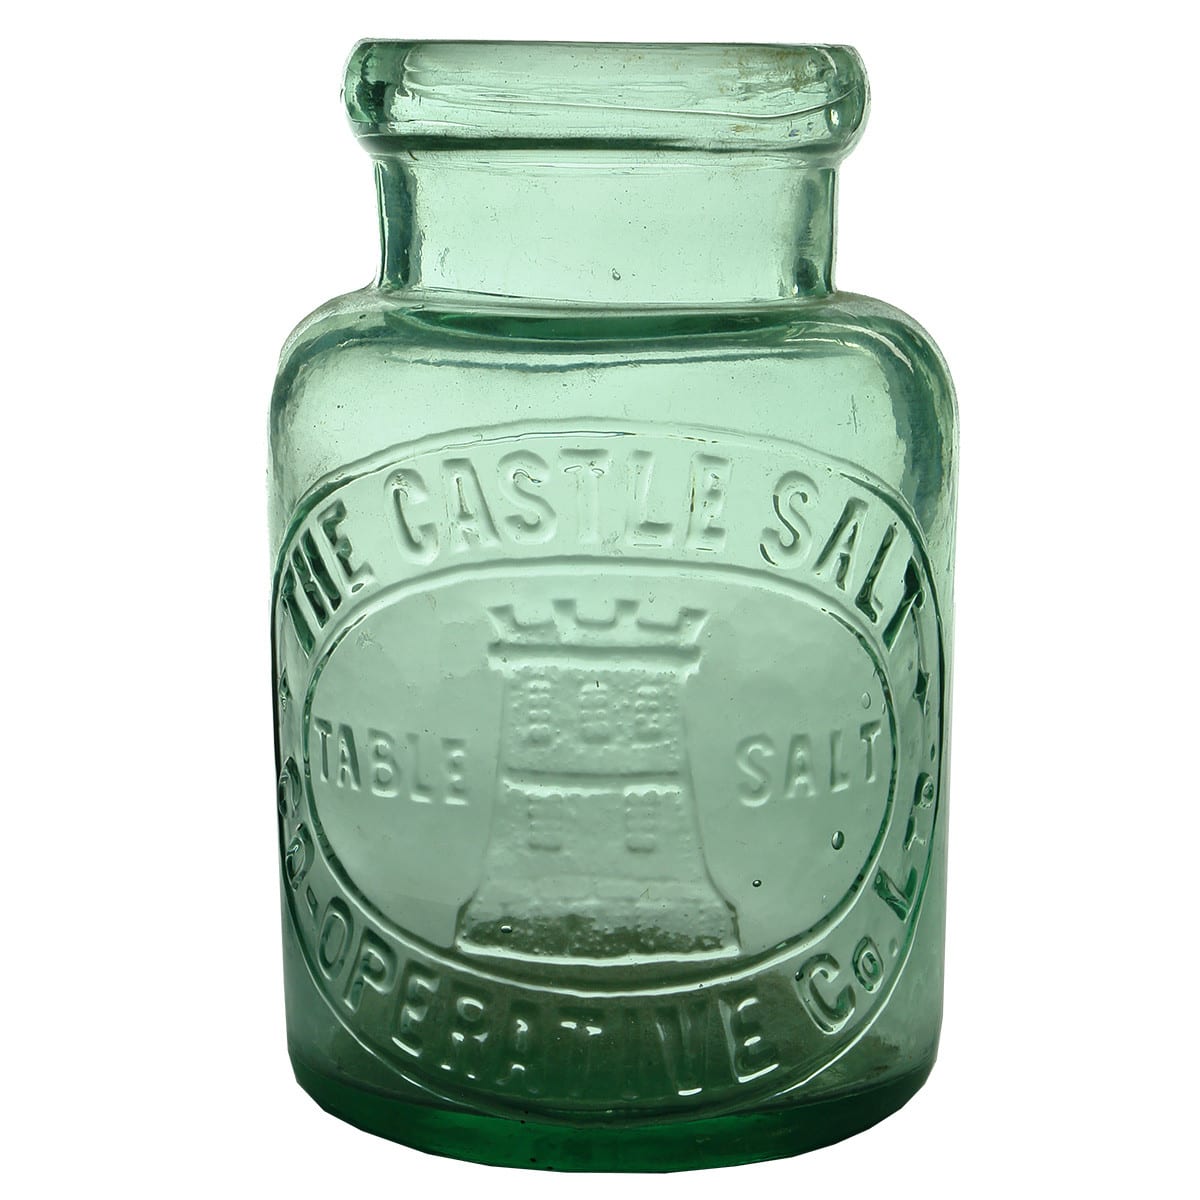 Salt Jar. Castle Salt Co-operative Co. Ltd. Short Neck. A base mark. 2 Pound. (South Australia)